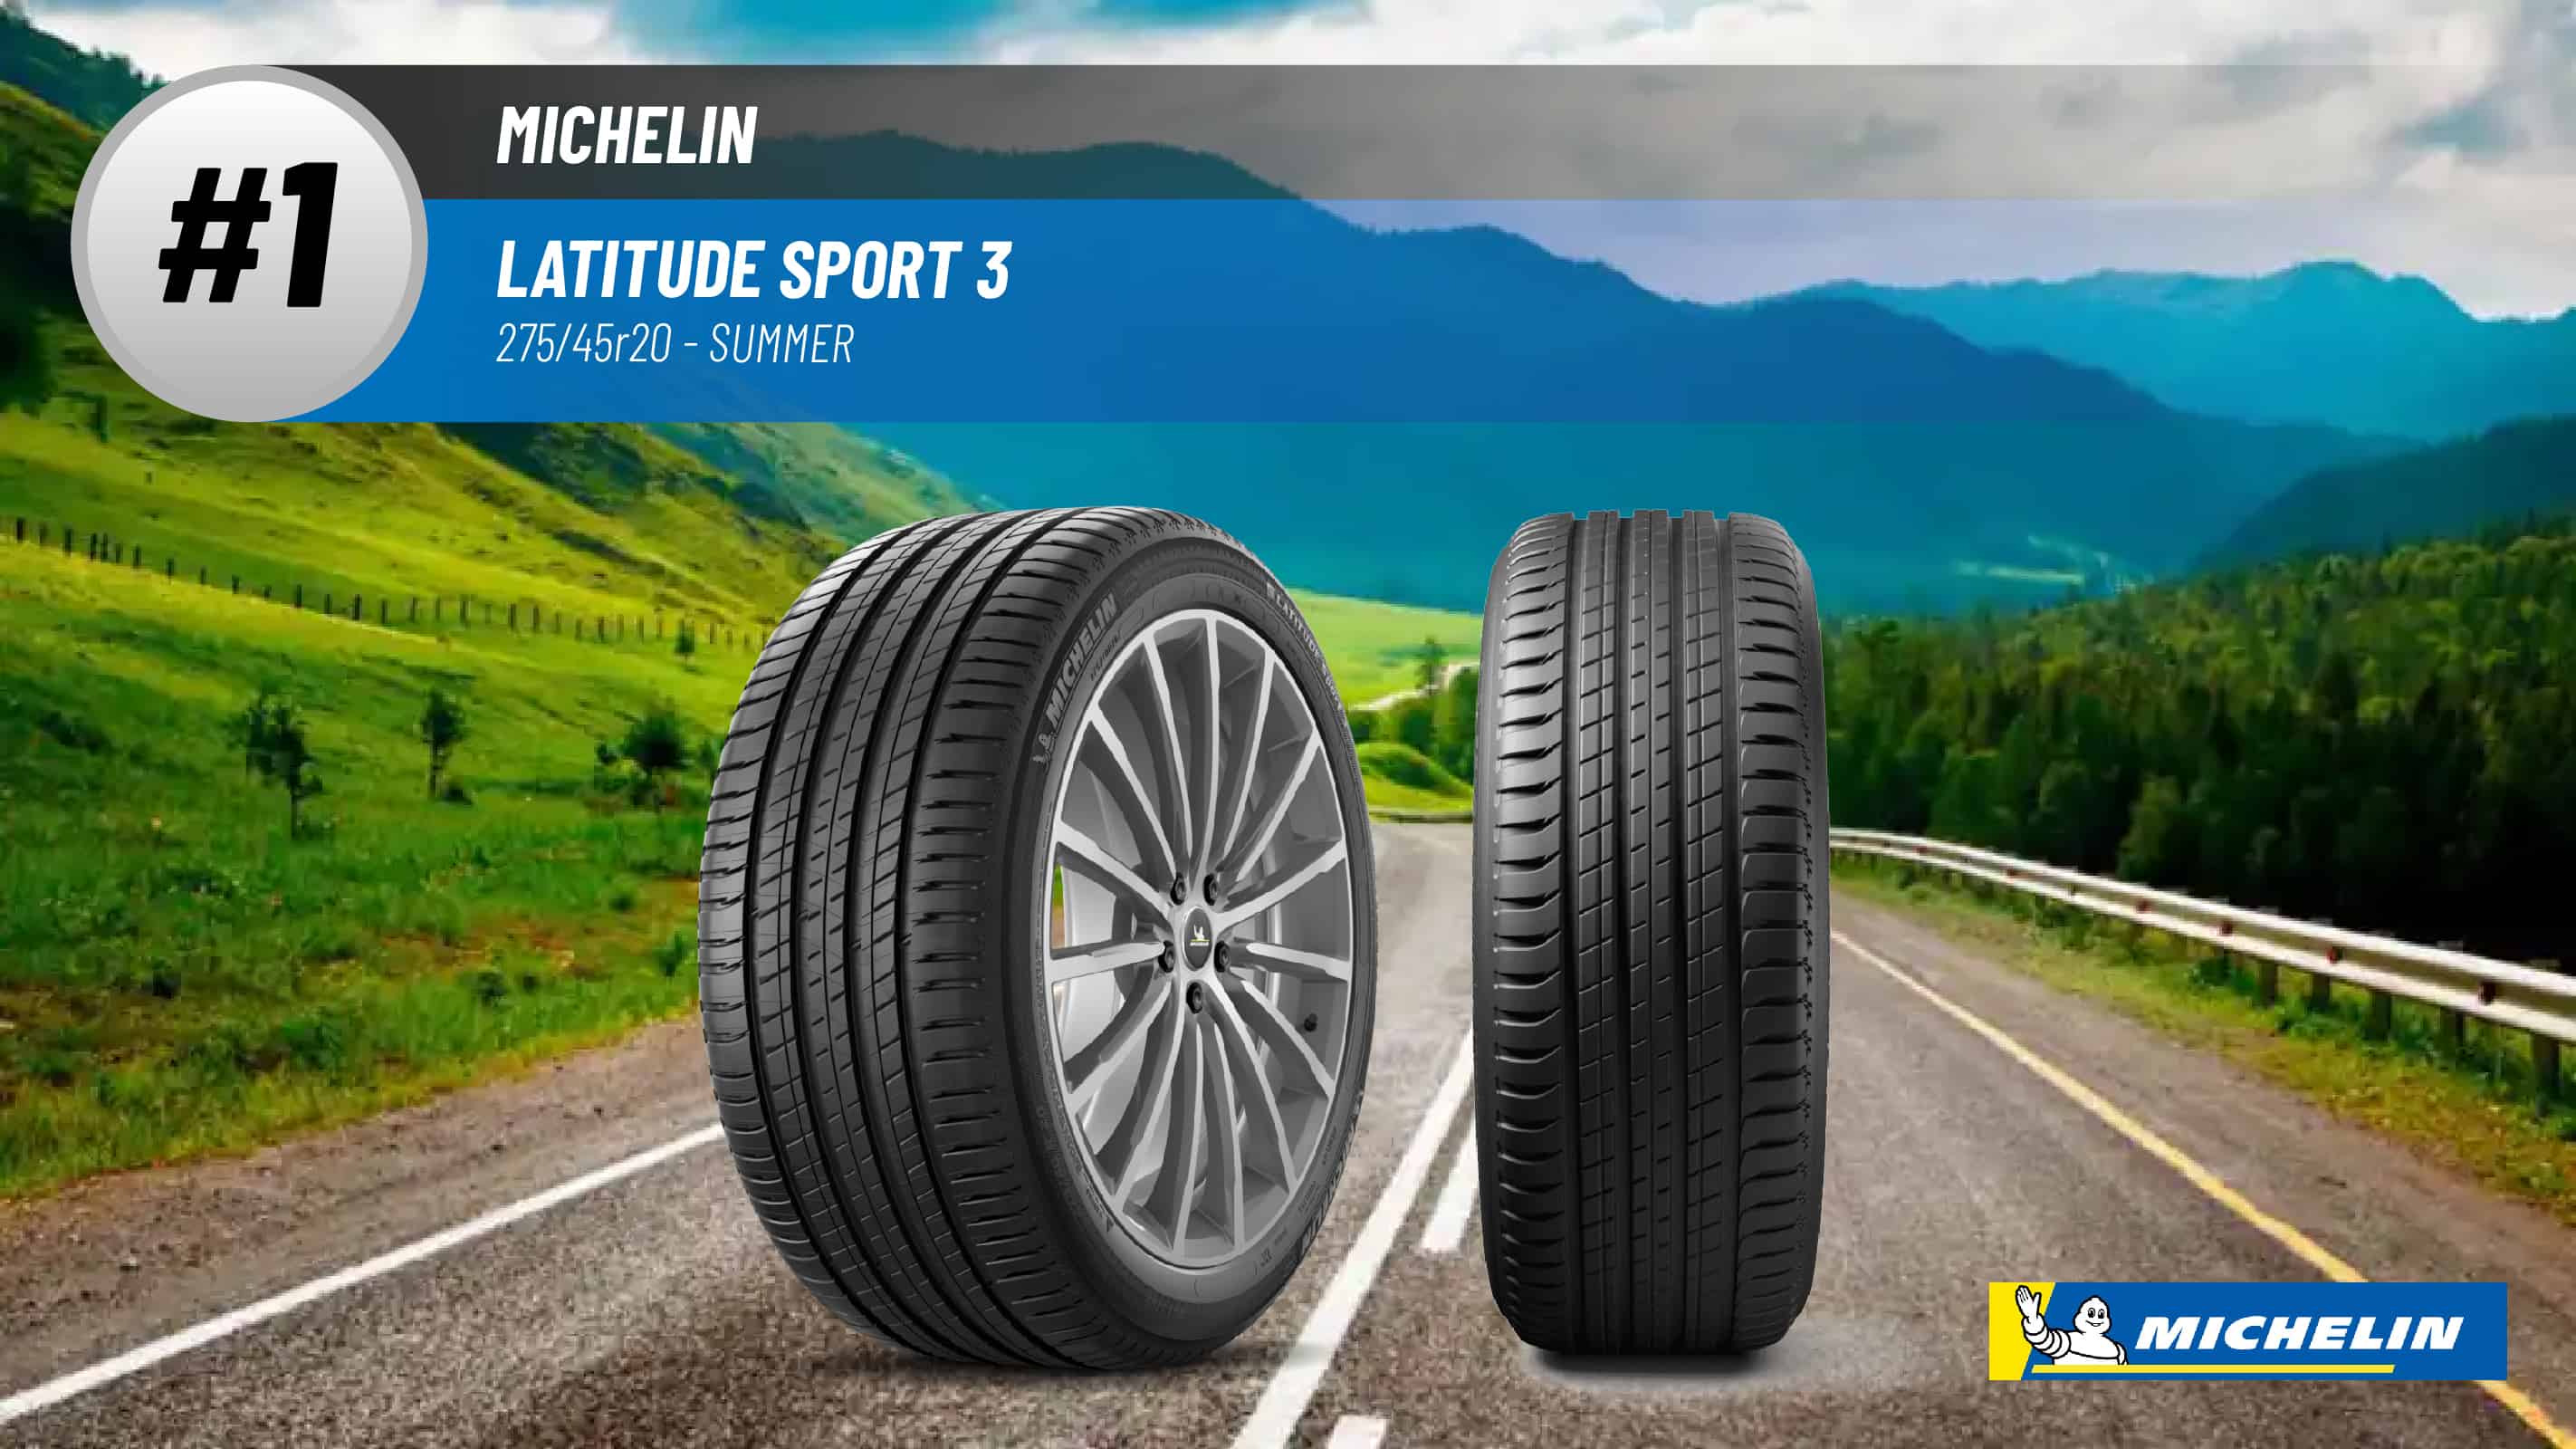 Top #1 Summer Tires: Michelin Latitude Sport 3 – 275/45r20